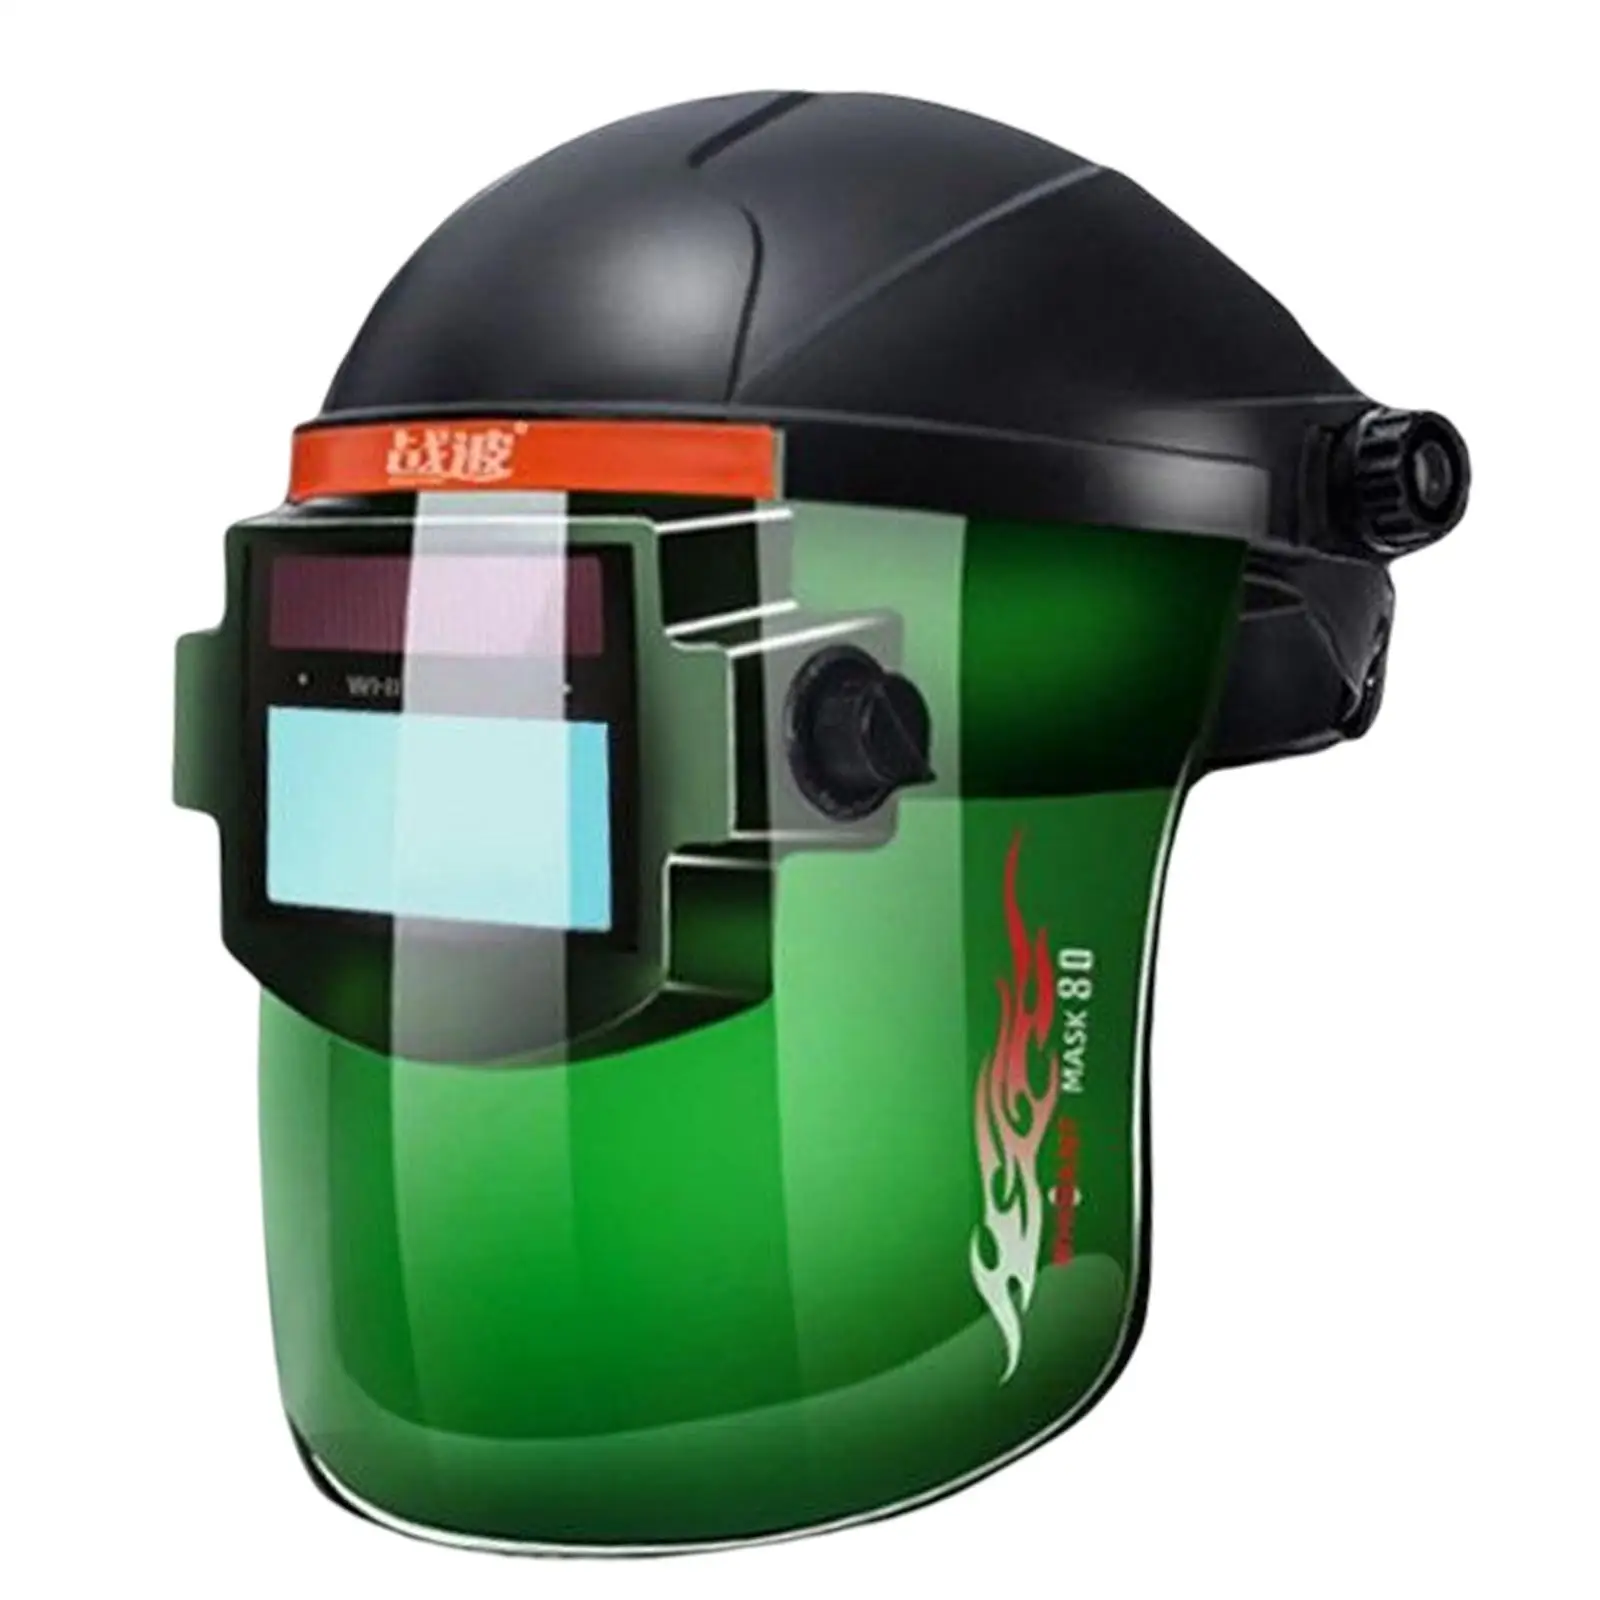 Auto Darkening Welding Mask Protective Welder Face Mask Large Viewing Screen True Color Welding Helmet for Mig TIG ARC Weld